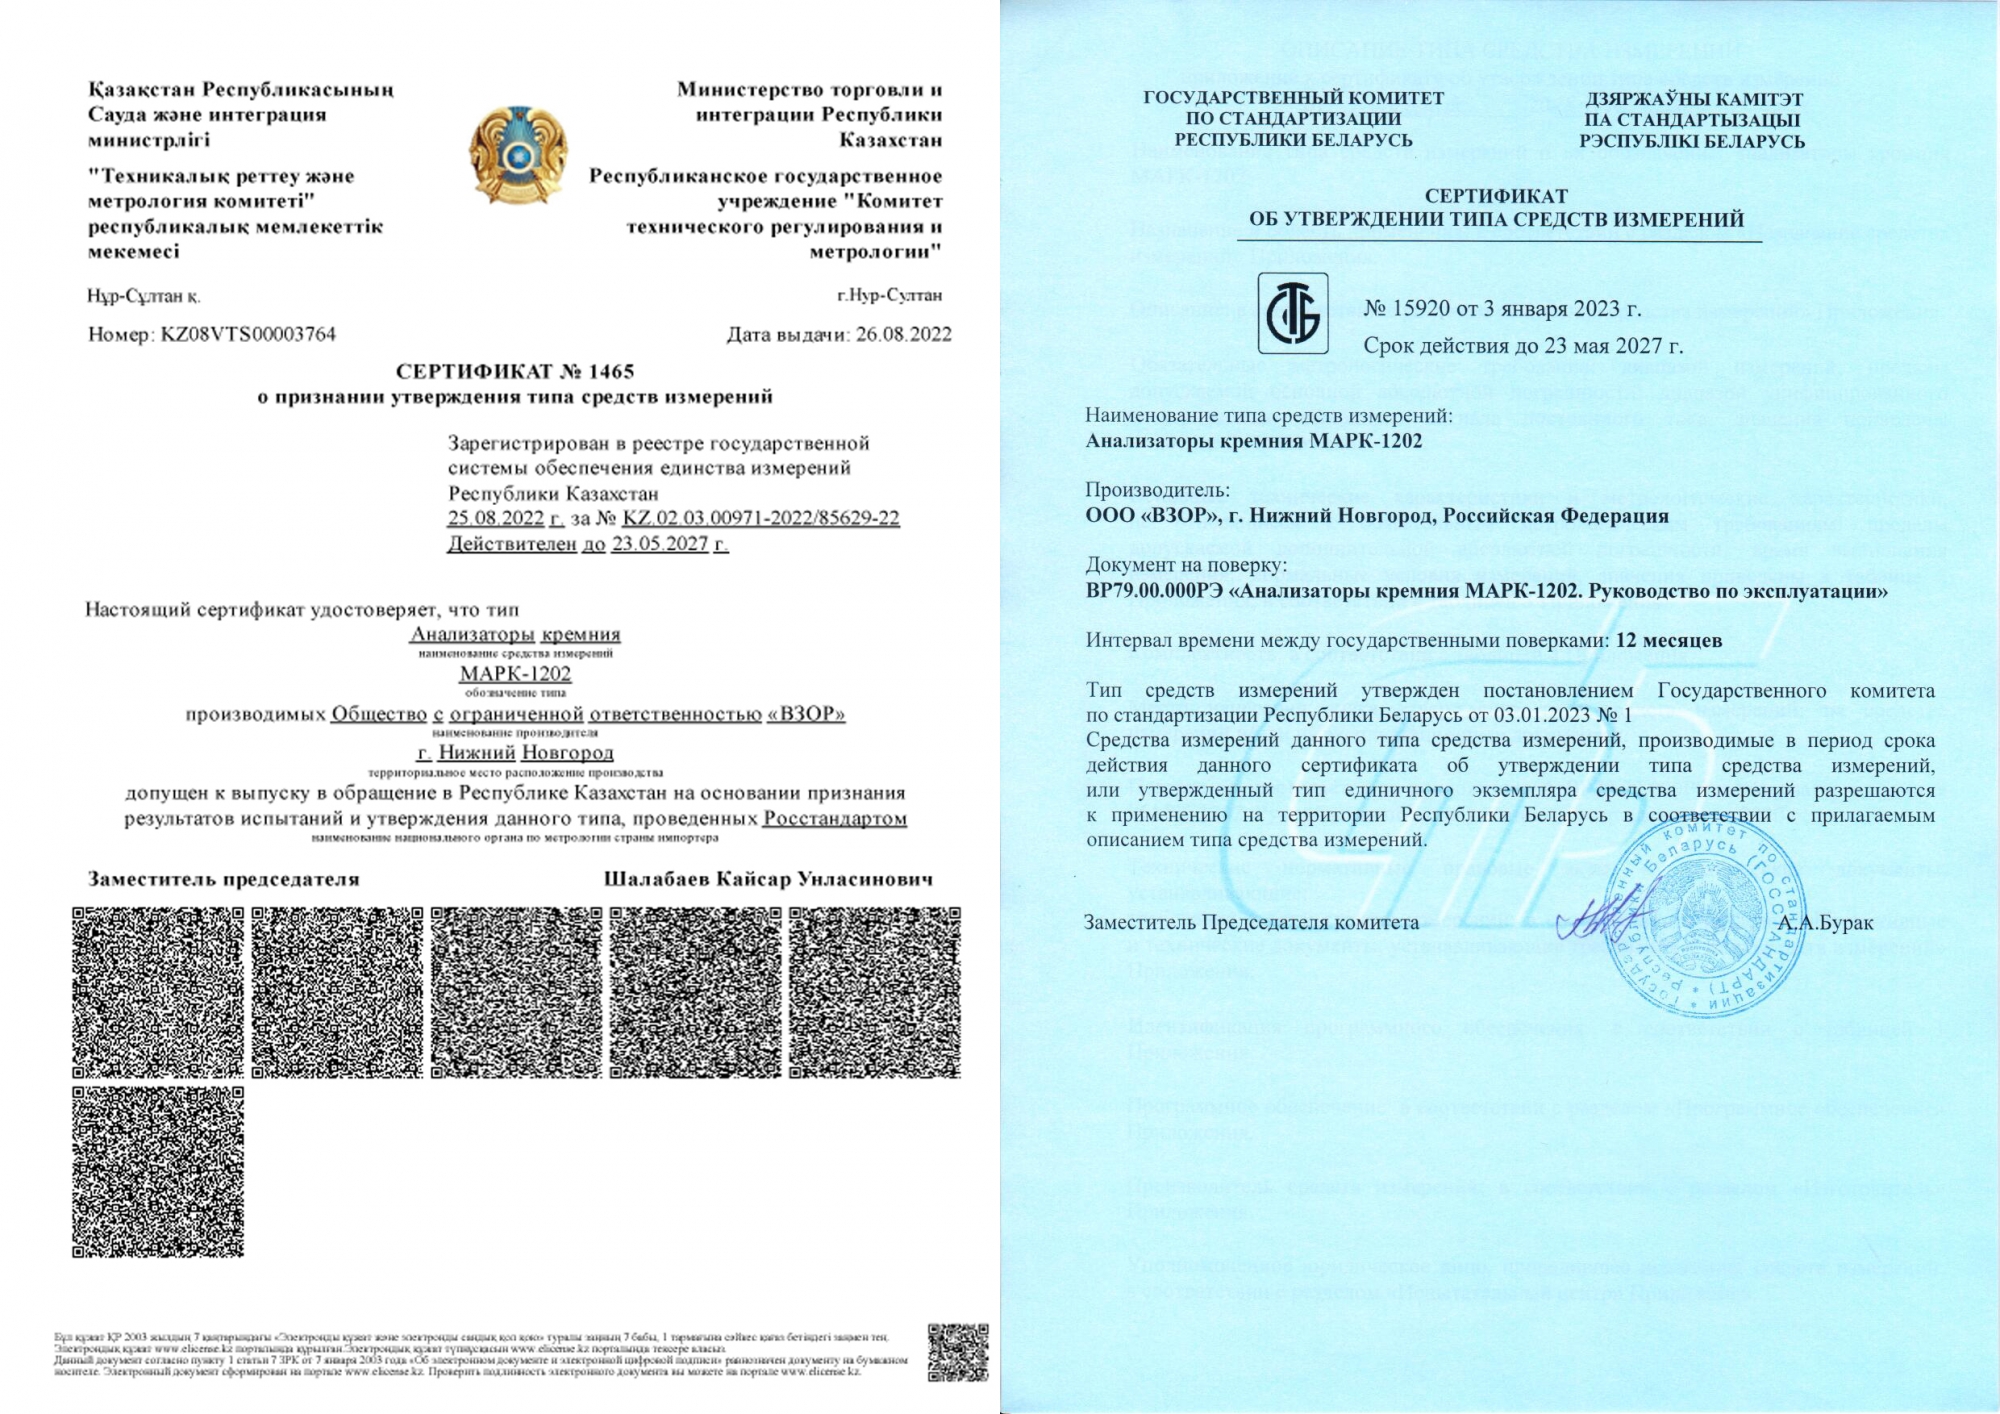 Анализатор кремния МАРК-1202 включен в реестры средств измерений Беларуси и Казахстана